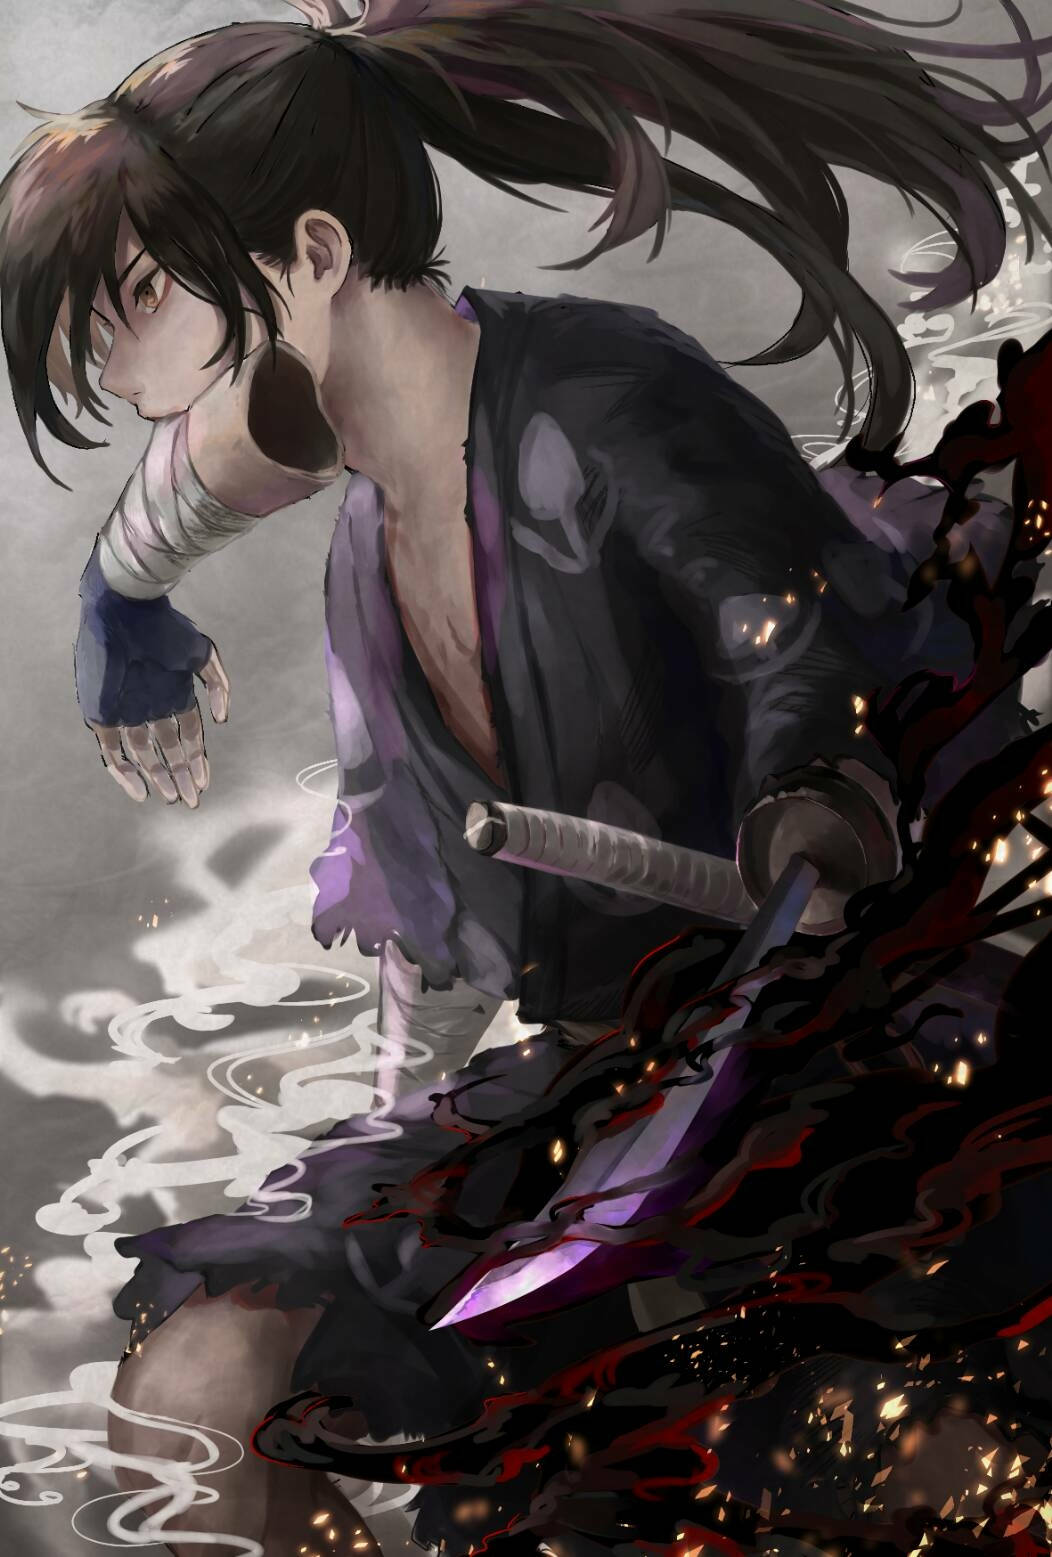 Hyakkimaru Of Dororo Wields His Trusty Twin Swords In The Epic Samurai Anime. Wallpaper